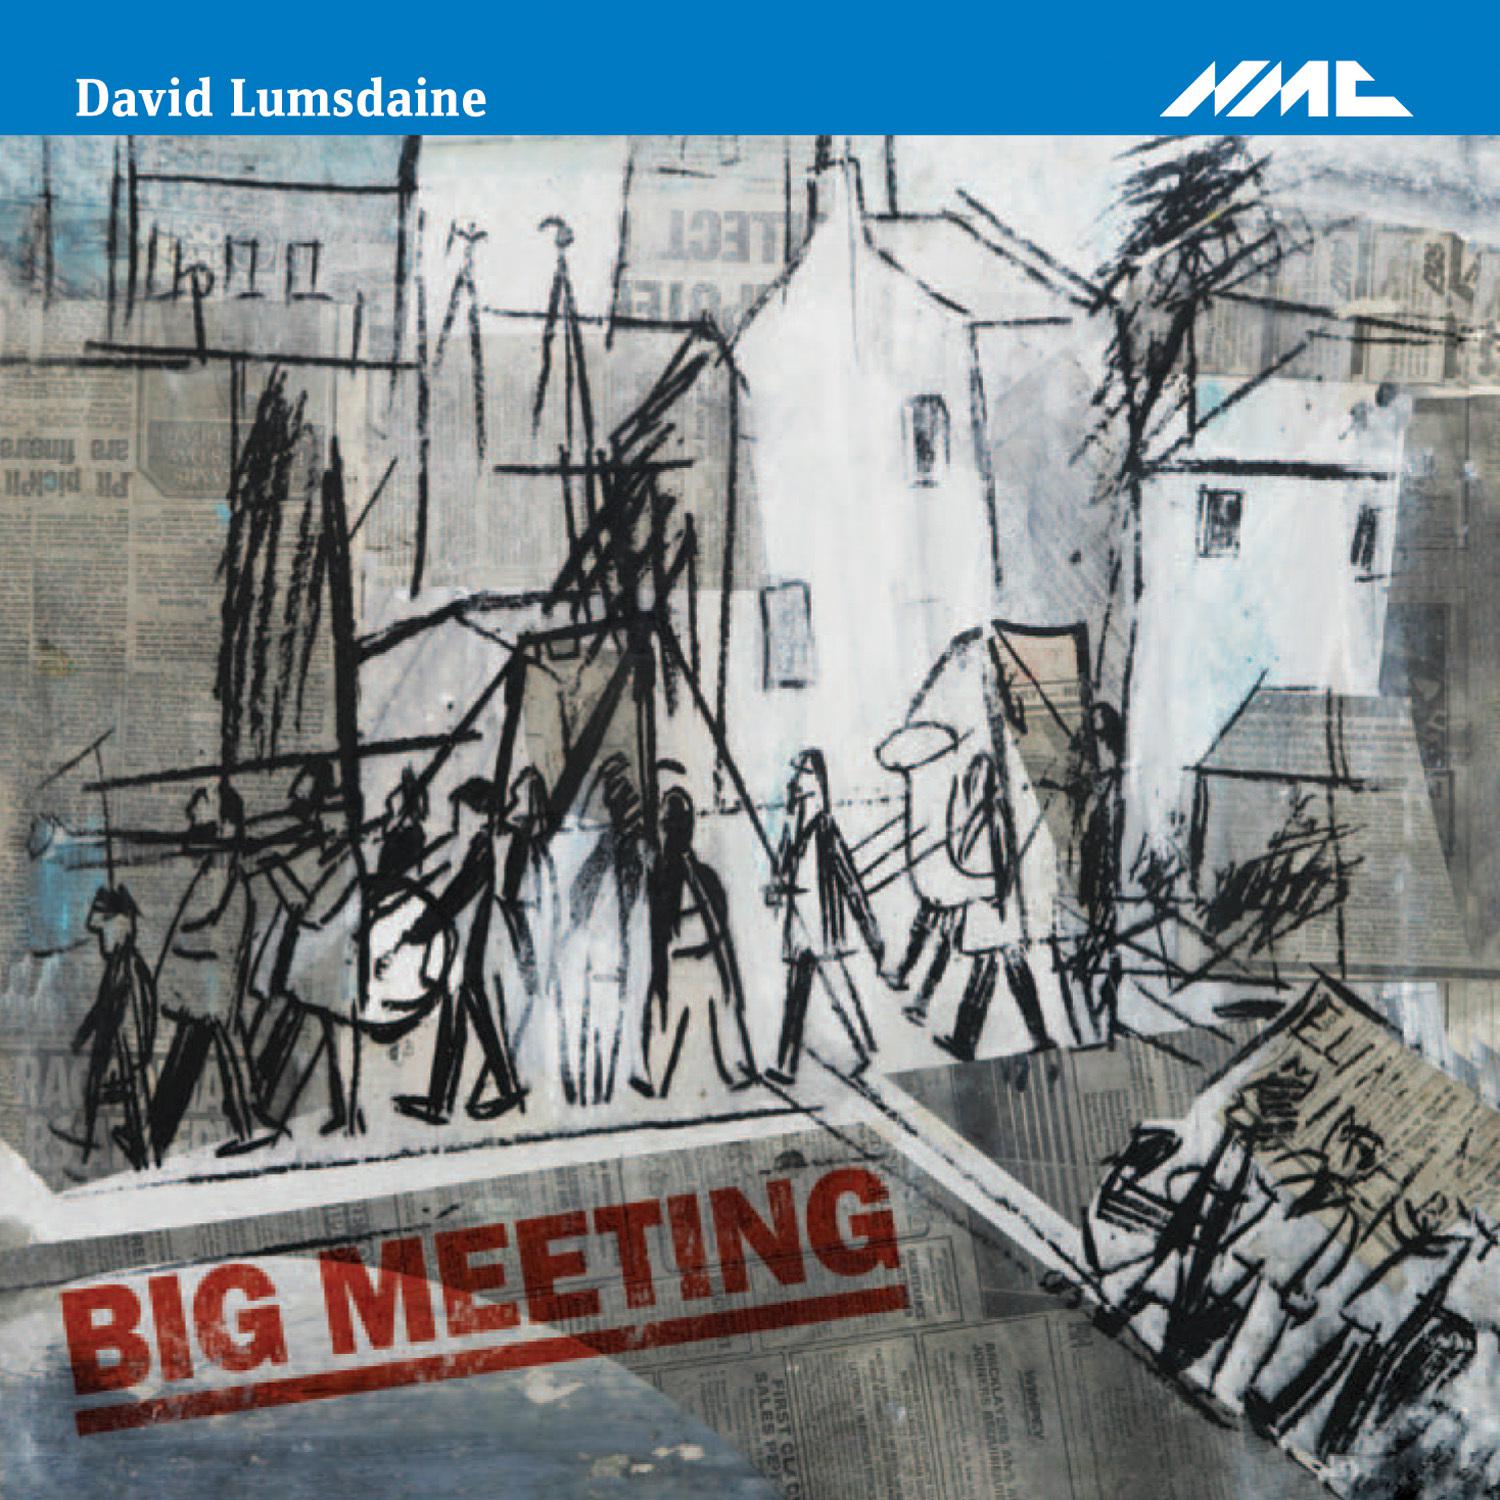 David Lumsdaine - Big Meeting: Underground. Questions